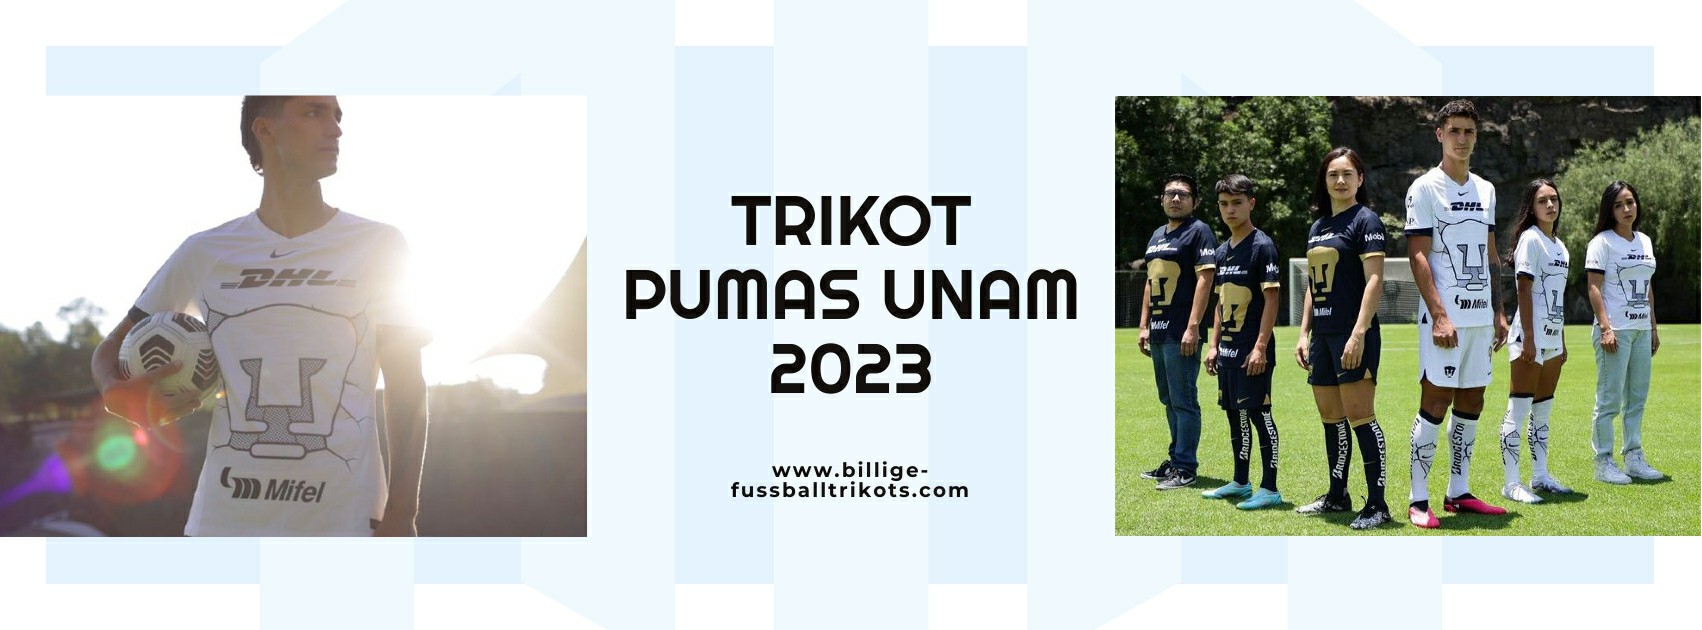 Pumas UNAM Trikot 2023-2024